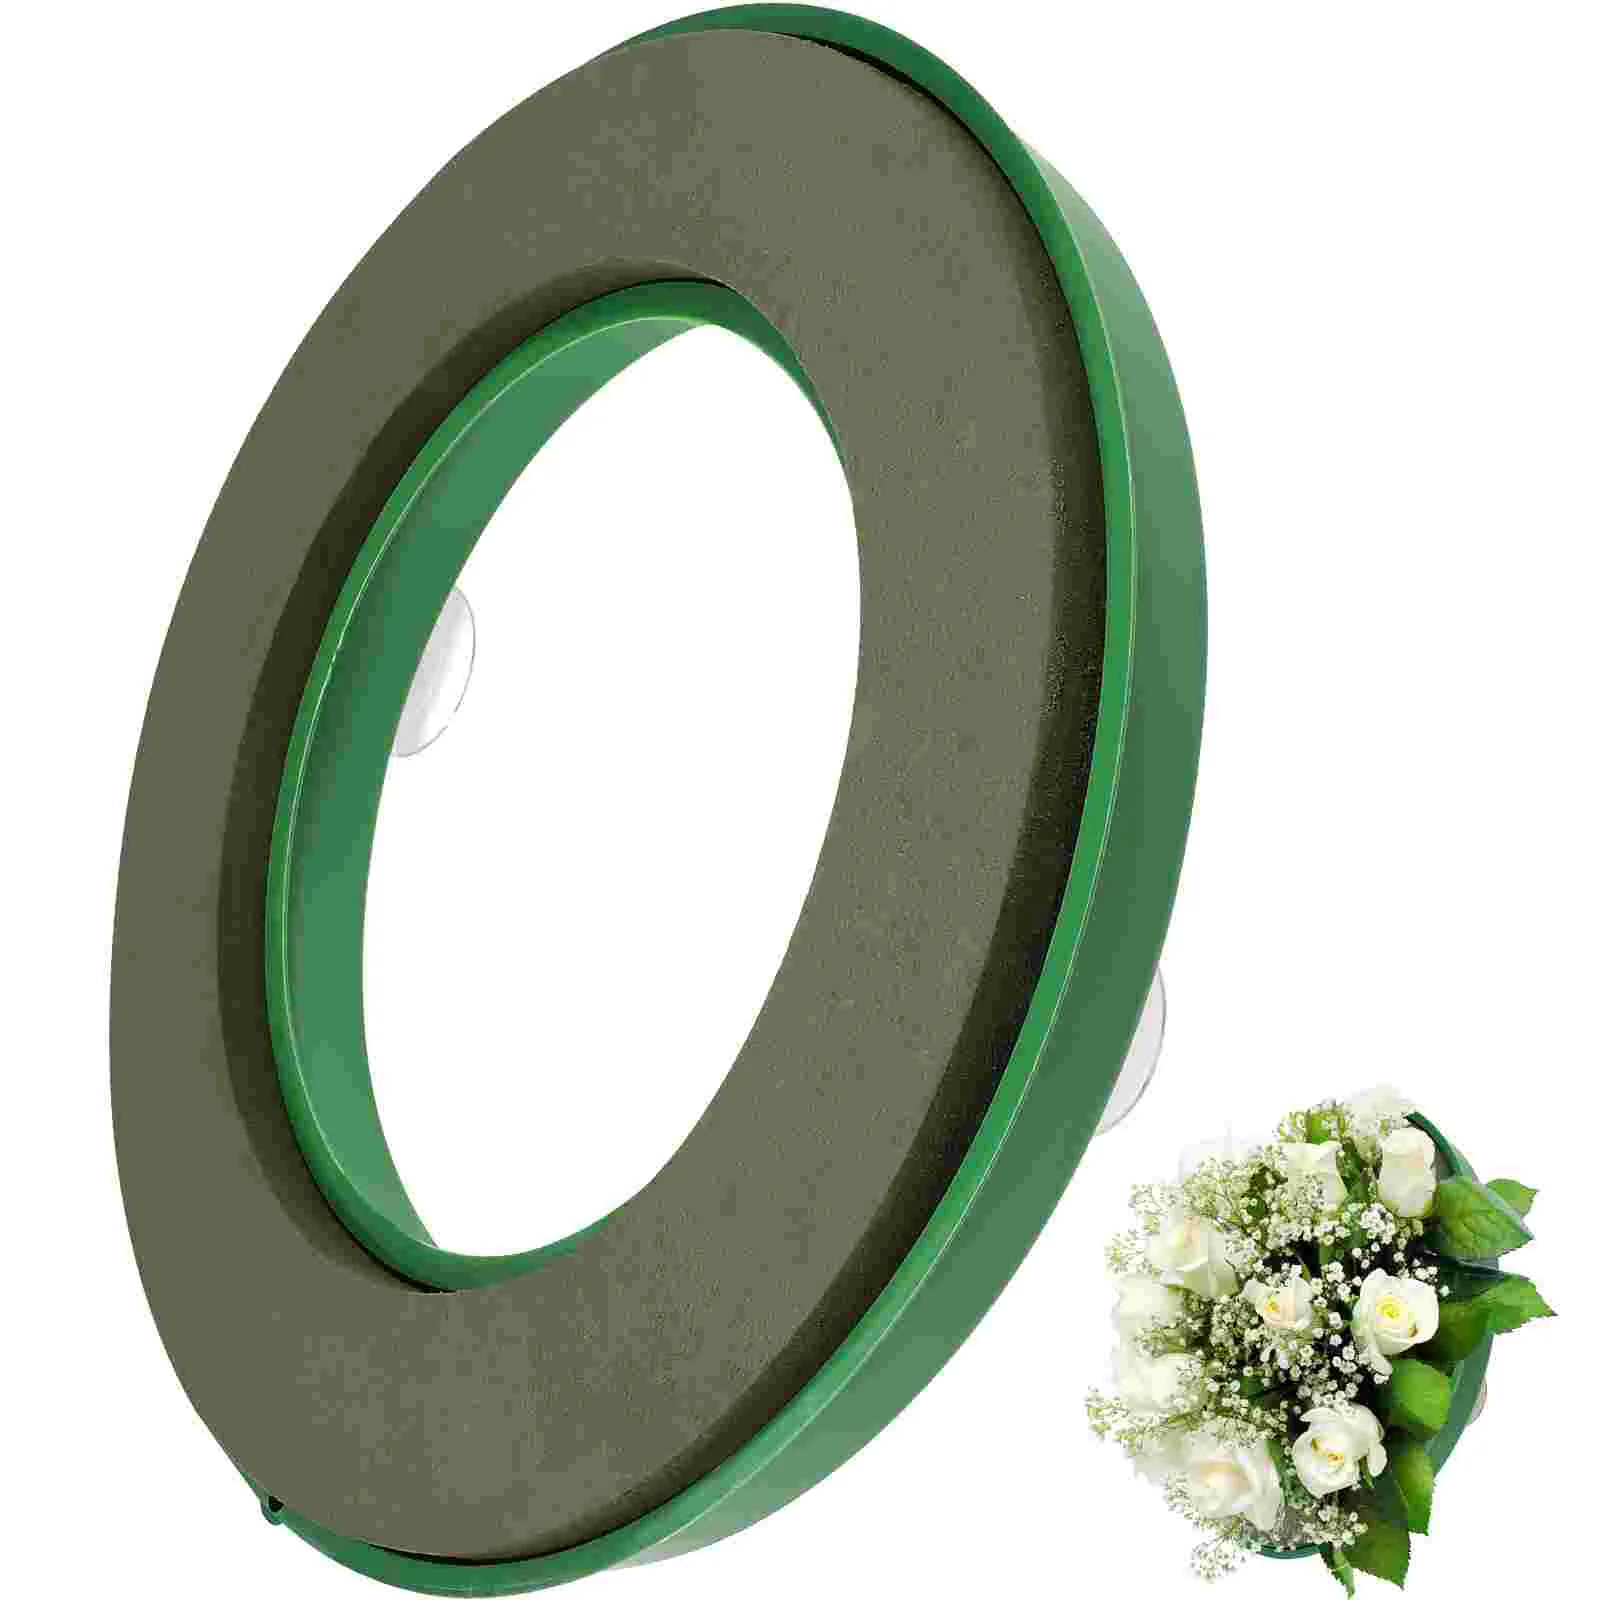 

Foam Wreath Floral Flower Ring Blocks Form Arrangements Supplies Circles Hoop Funeral Round Garland Making Projects Craft